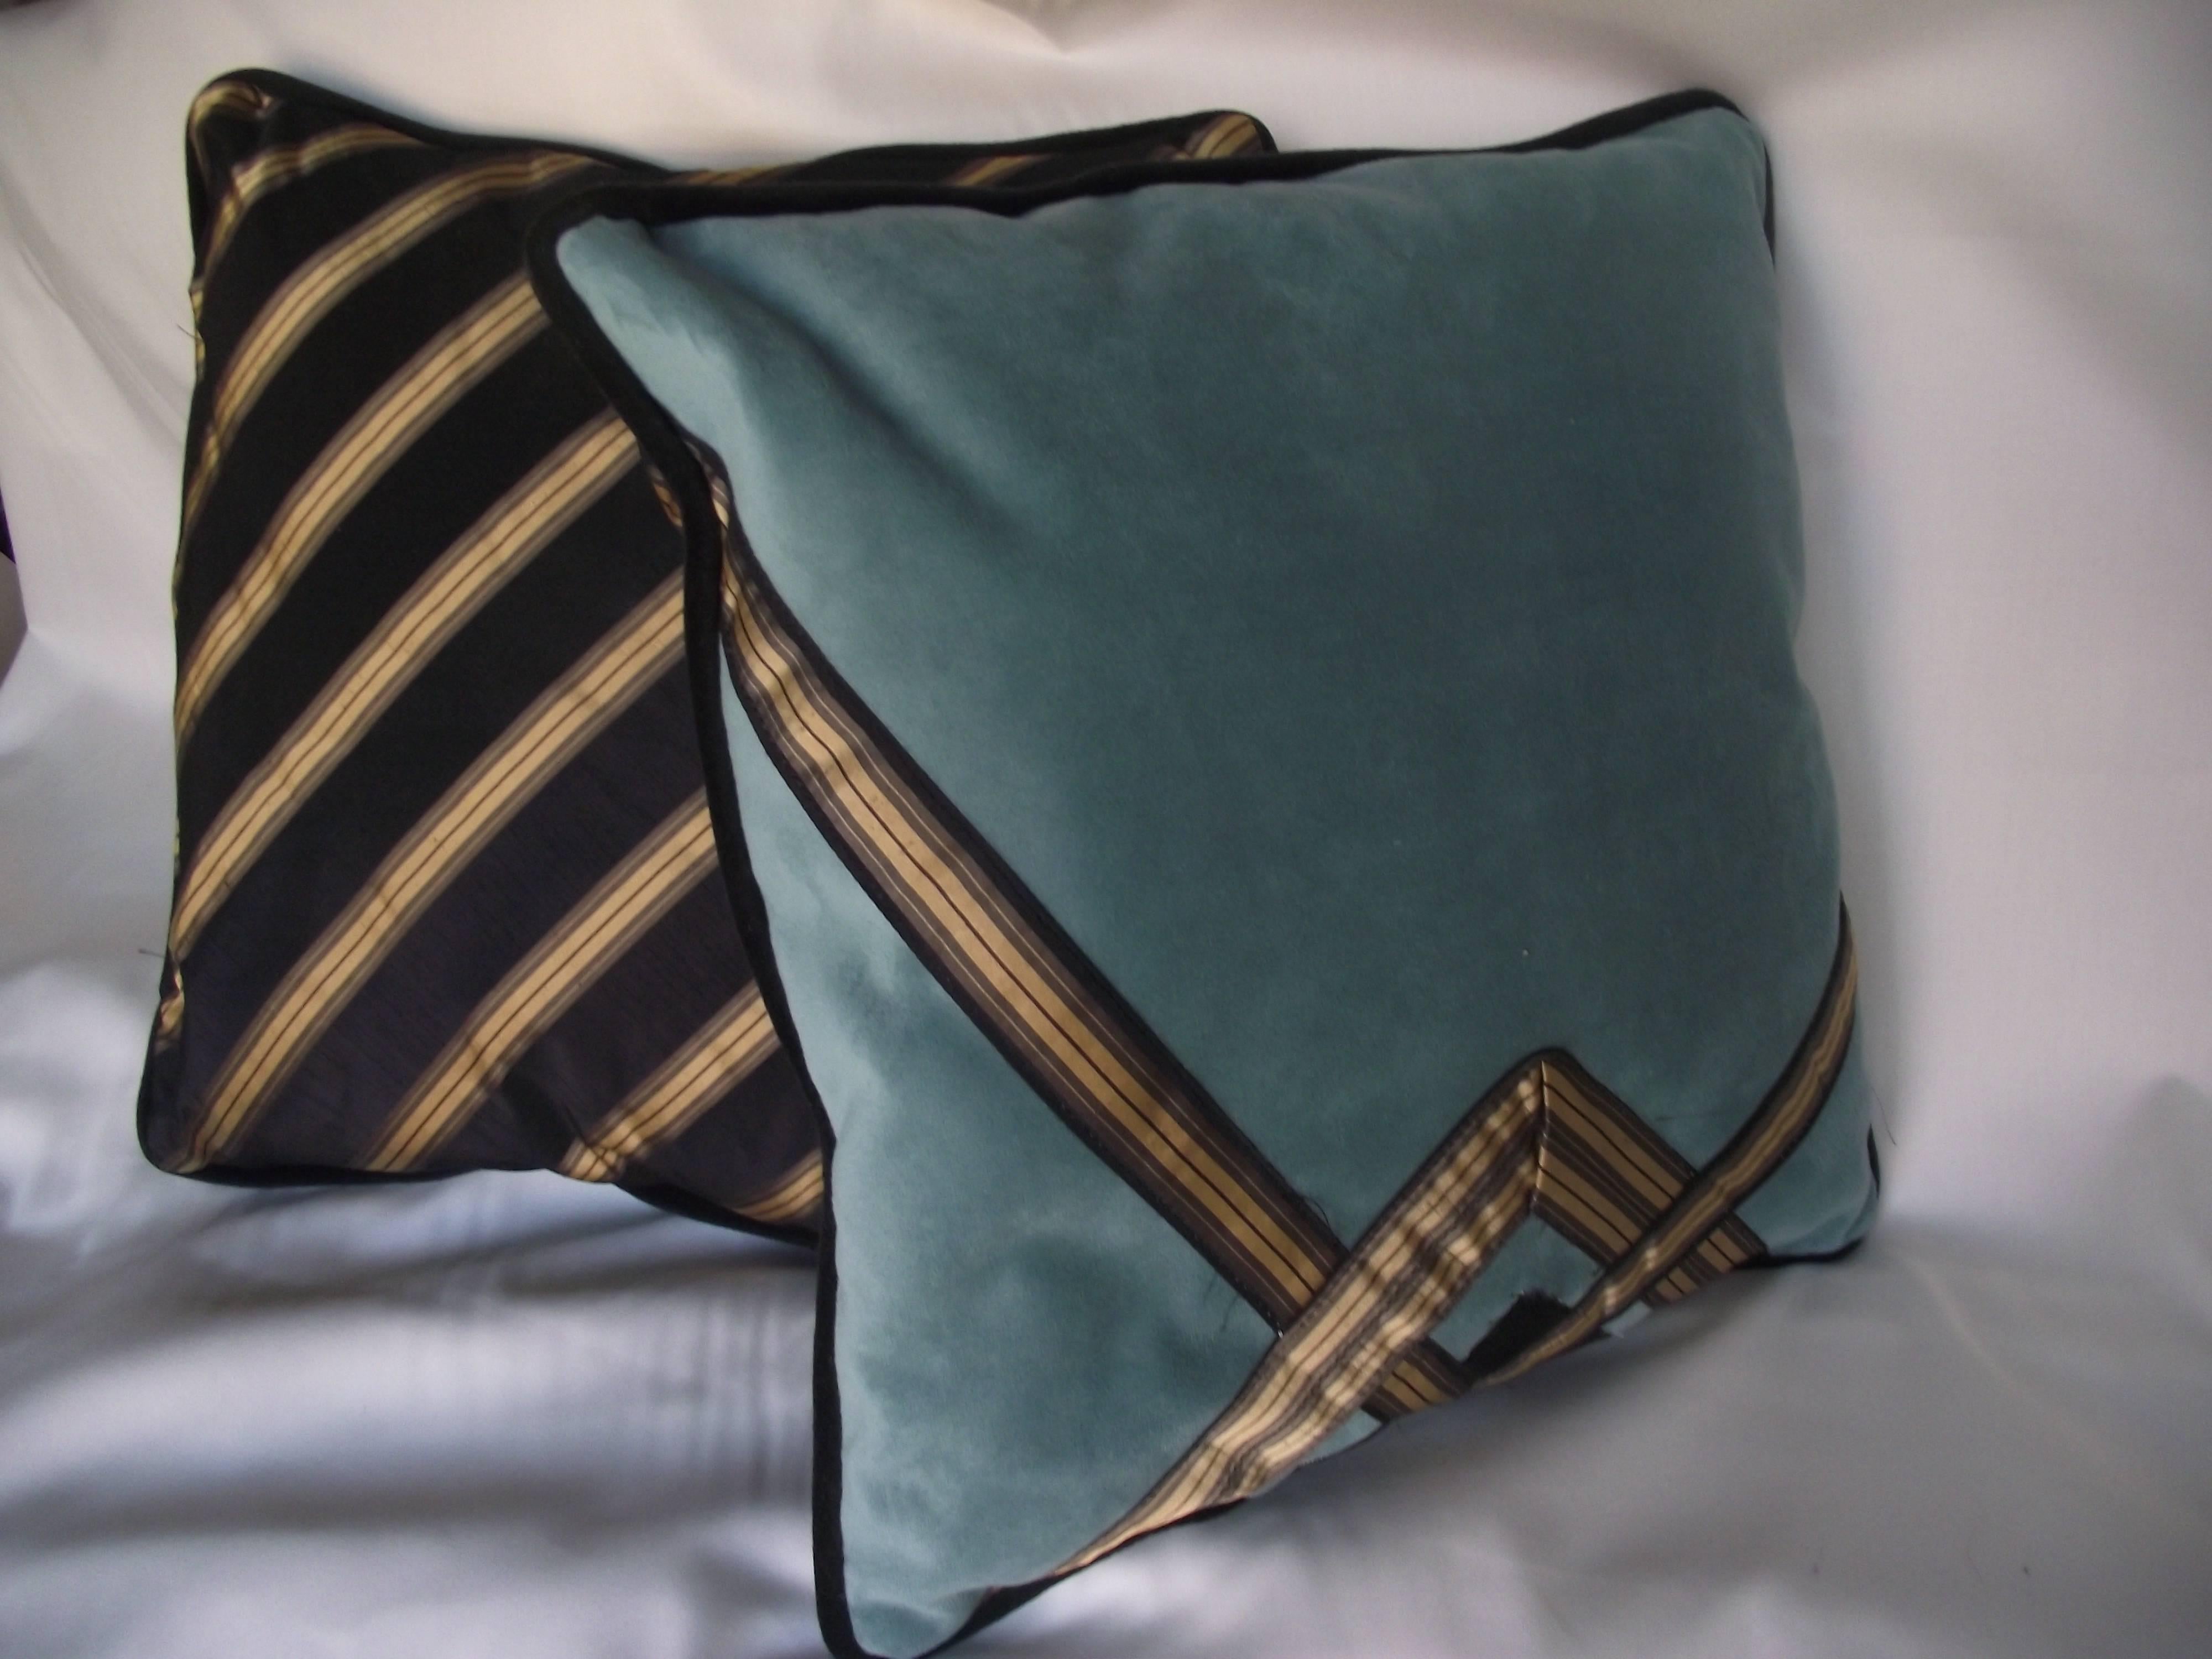 American Art Deco Pillows, Blue Black and Gold Velvet Throw Pillows